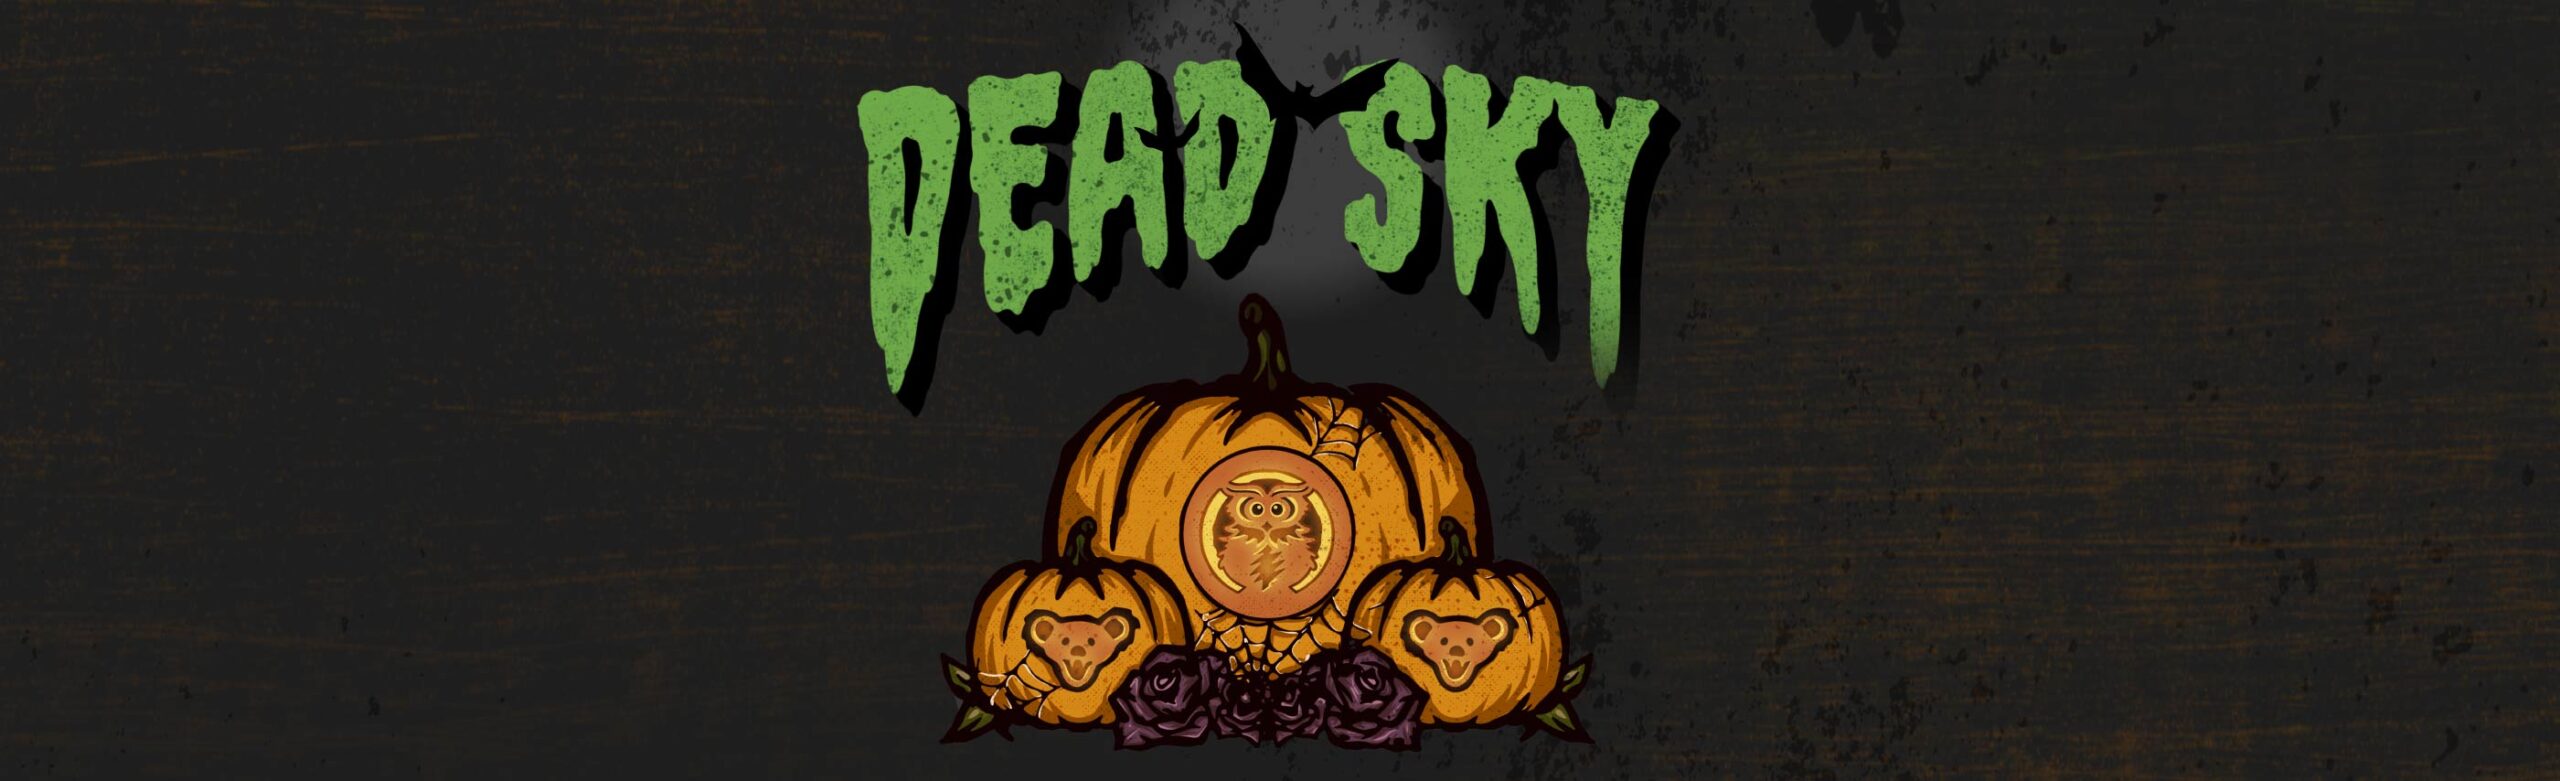 Bozeman’s Dead Sky Announce Halloween Show at The ELM Image